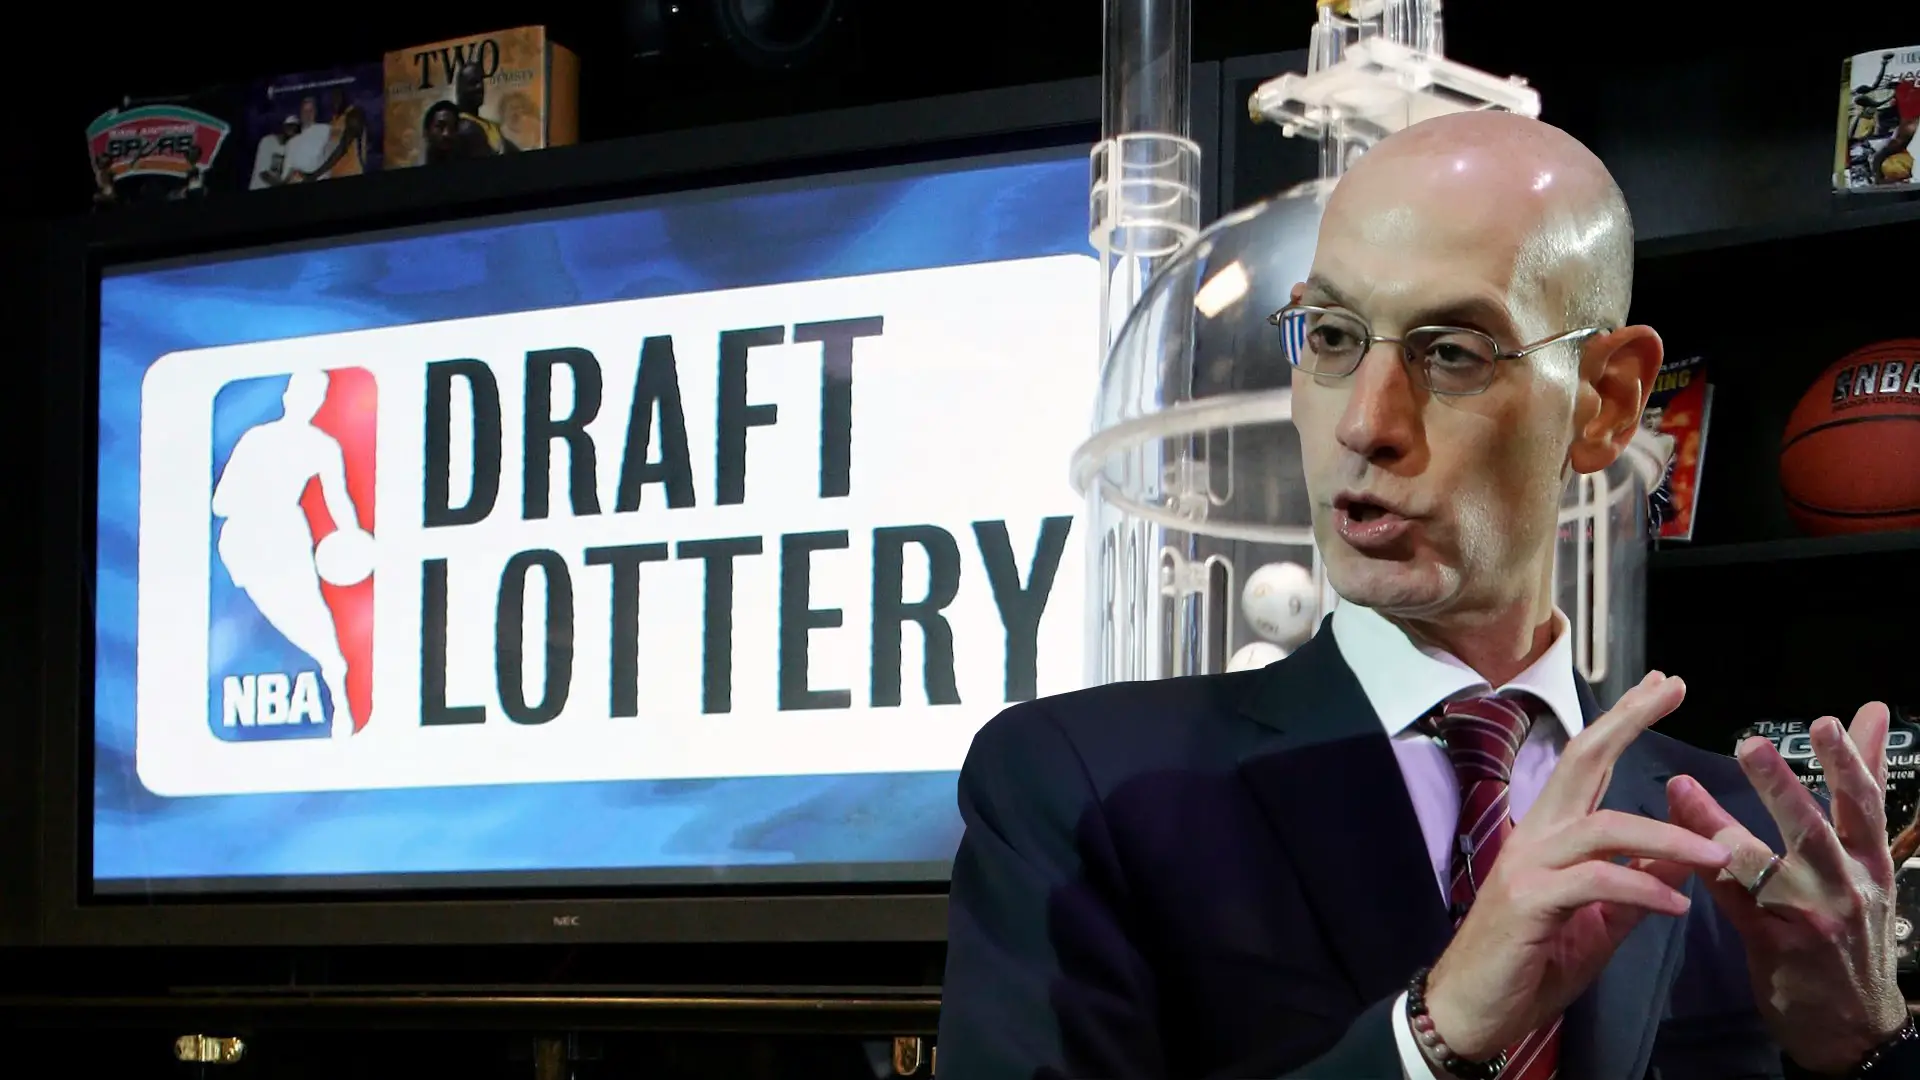 NBA Draft Lottery tournament